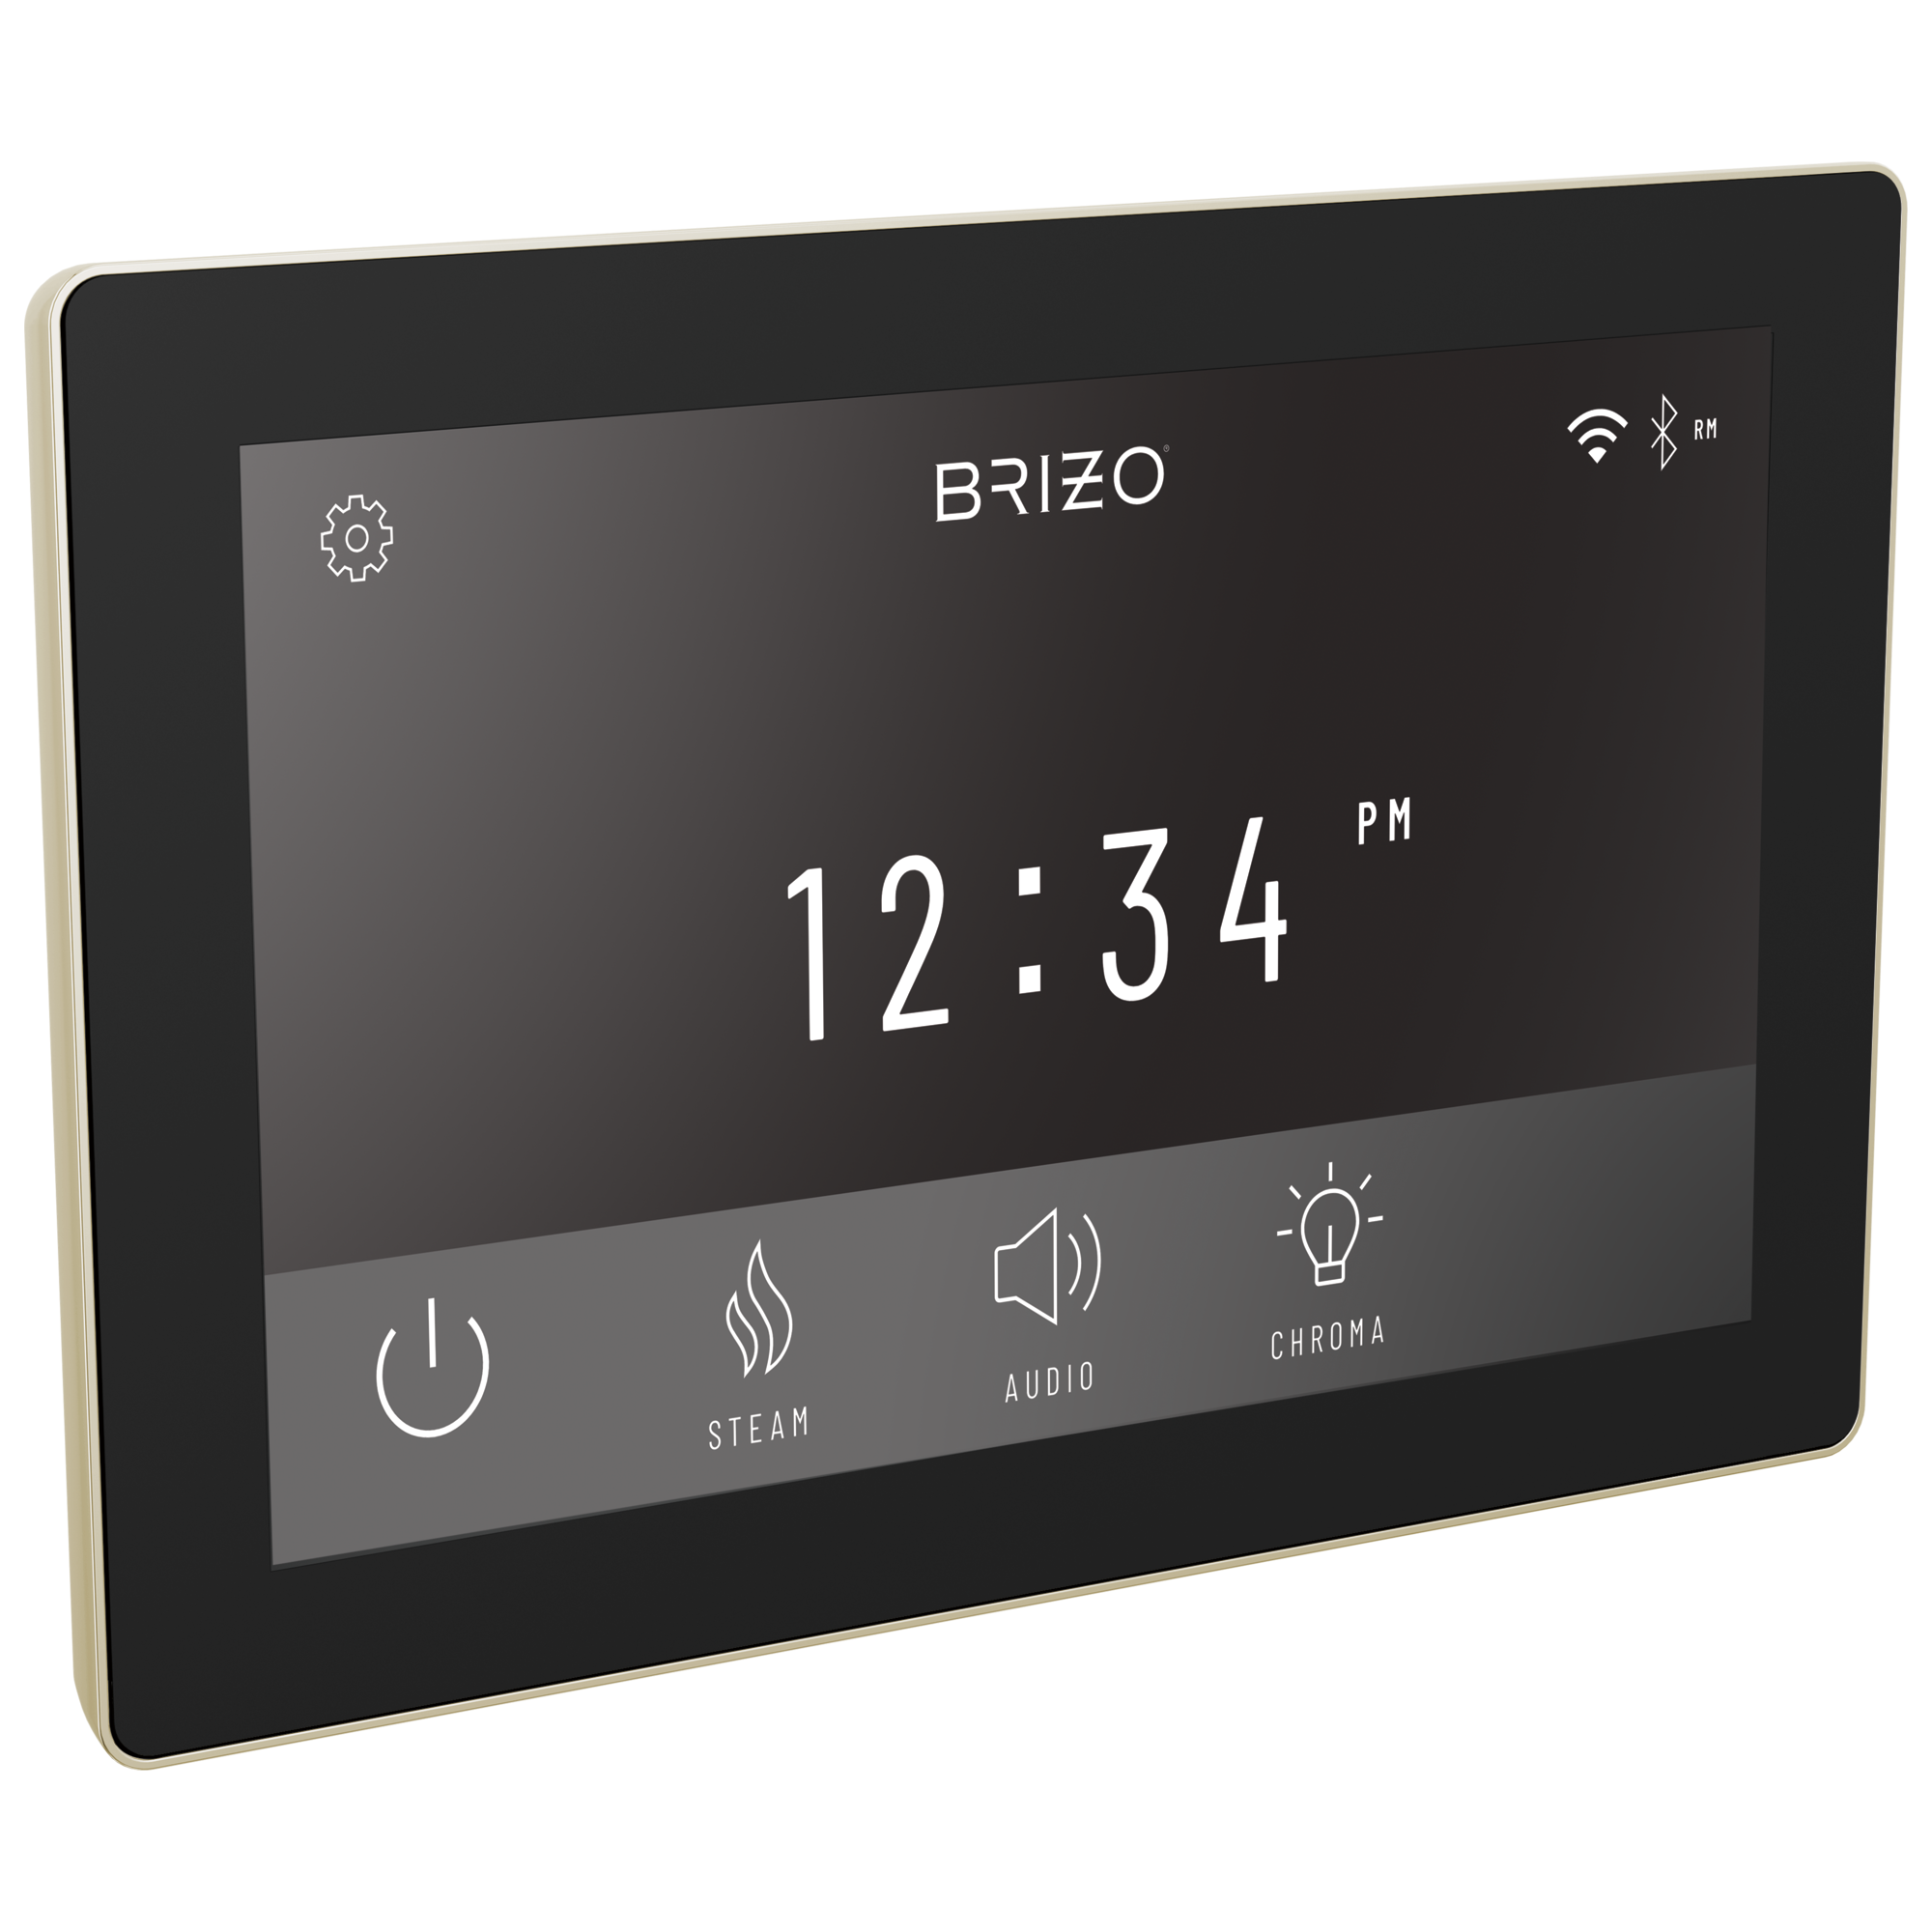 Brizo Digital Interface Controller